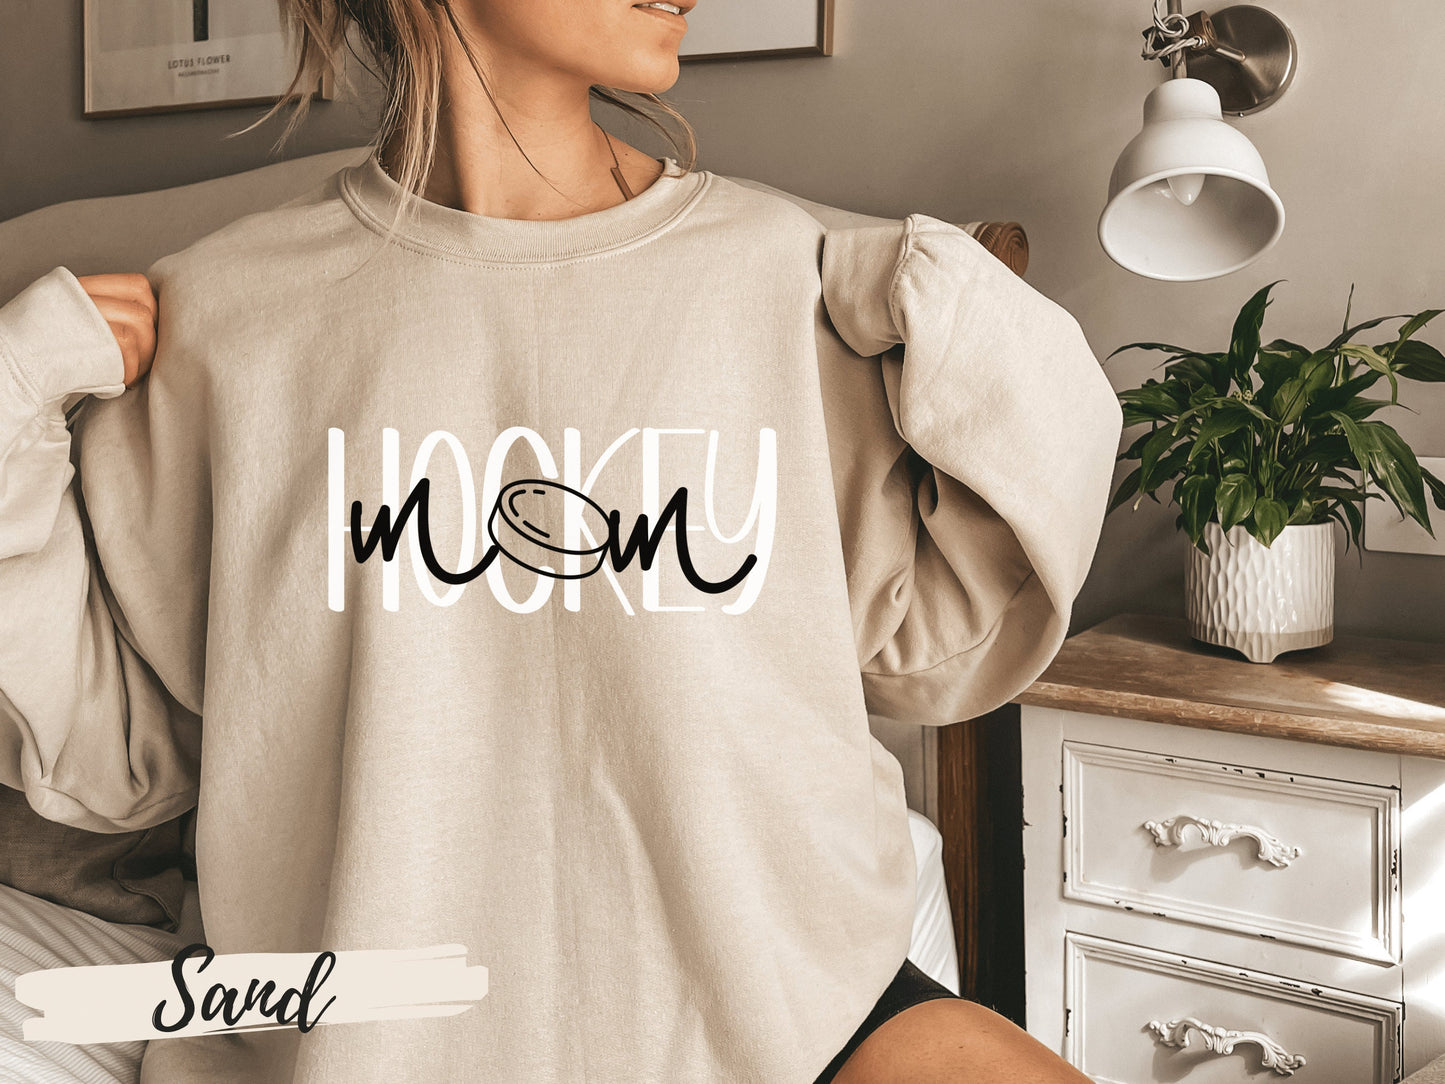 Hockey Mom Crewneck Sweatshirt for Mom Hockey Shirt Mom T Shirt for Women Hockey Mom Tshirt Mothers Day Gift for Hockey Mom Shirt